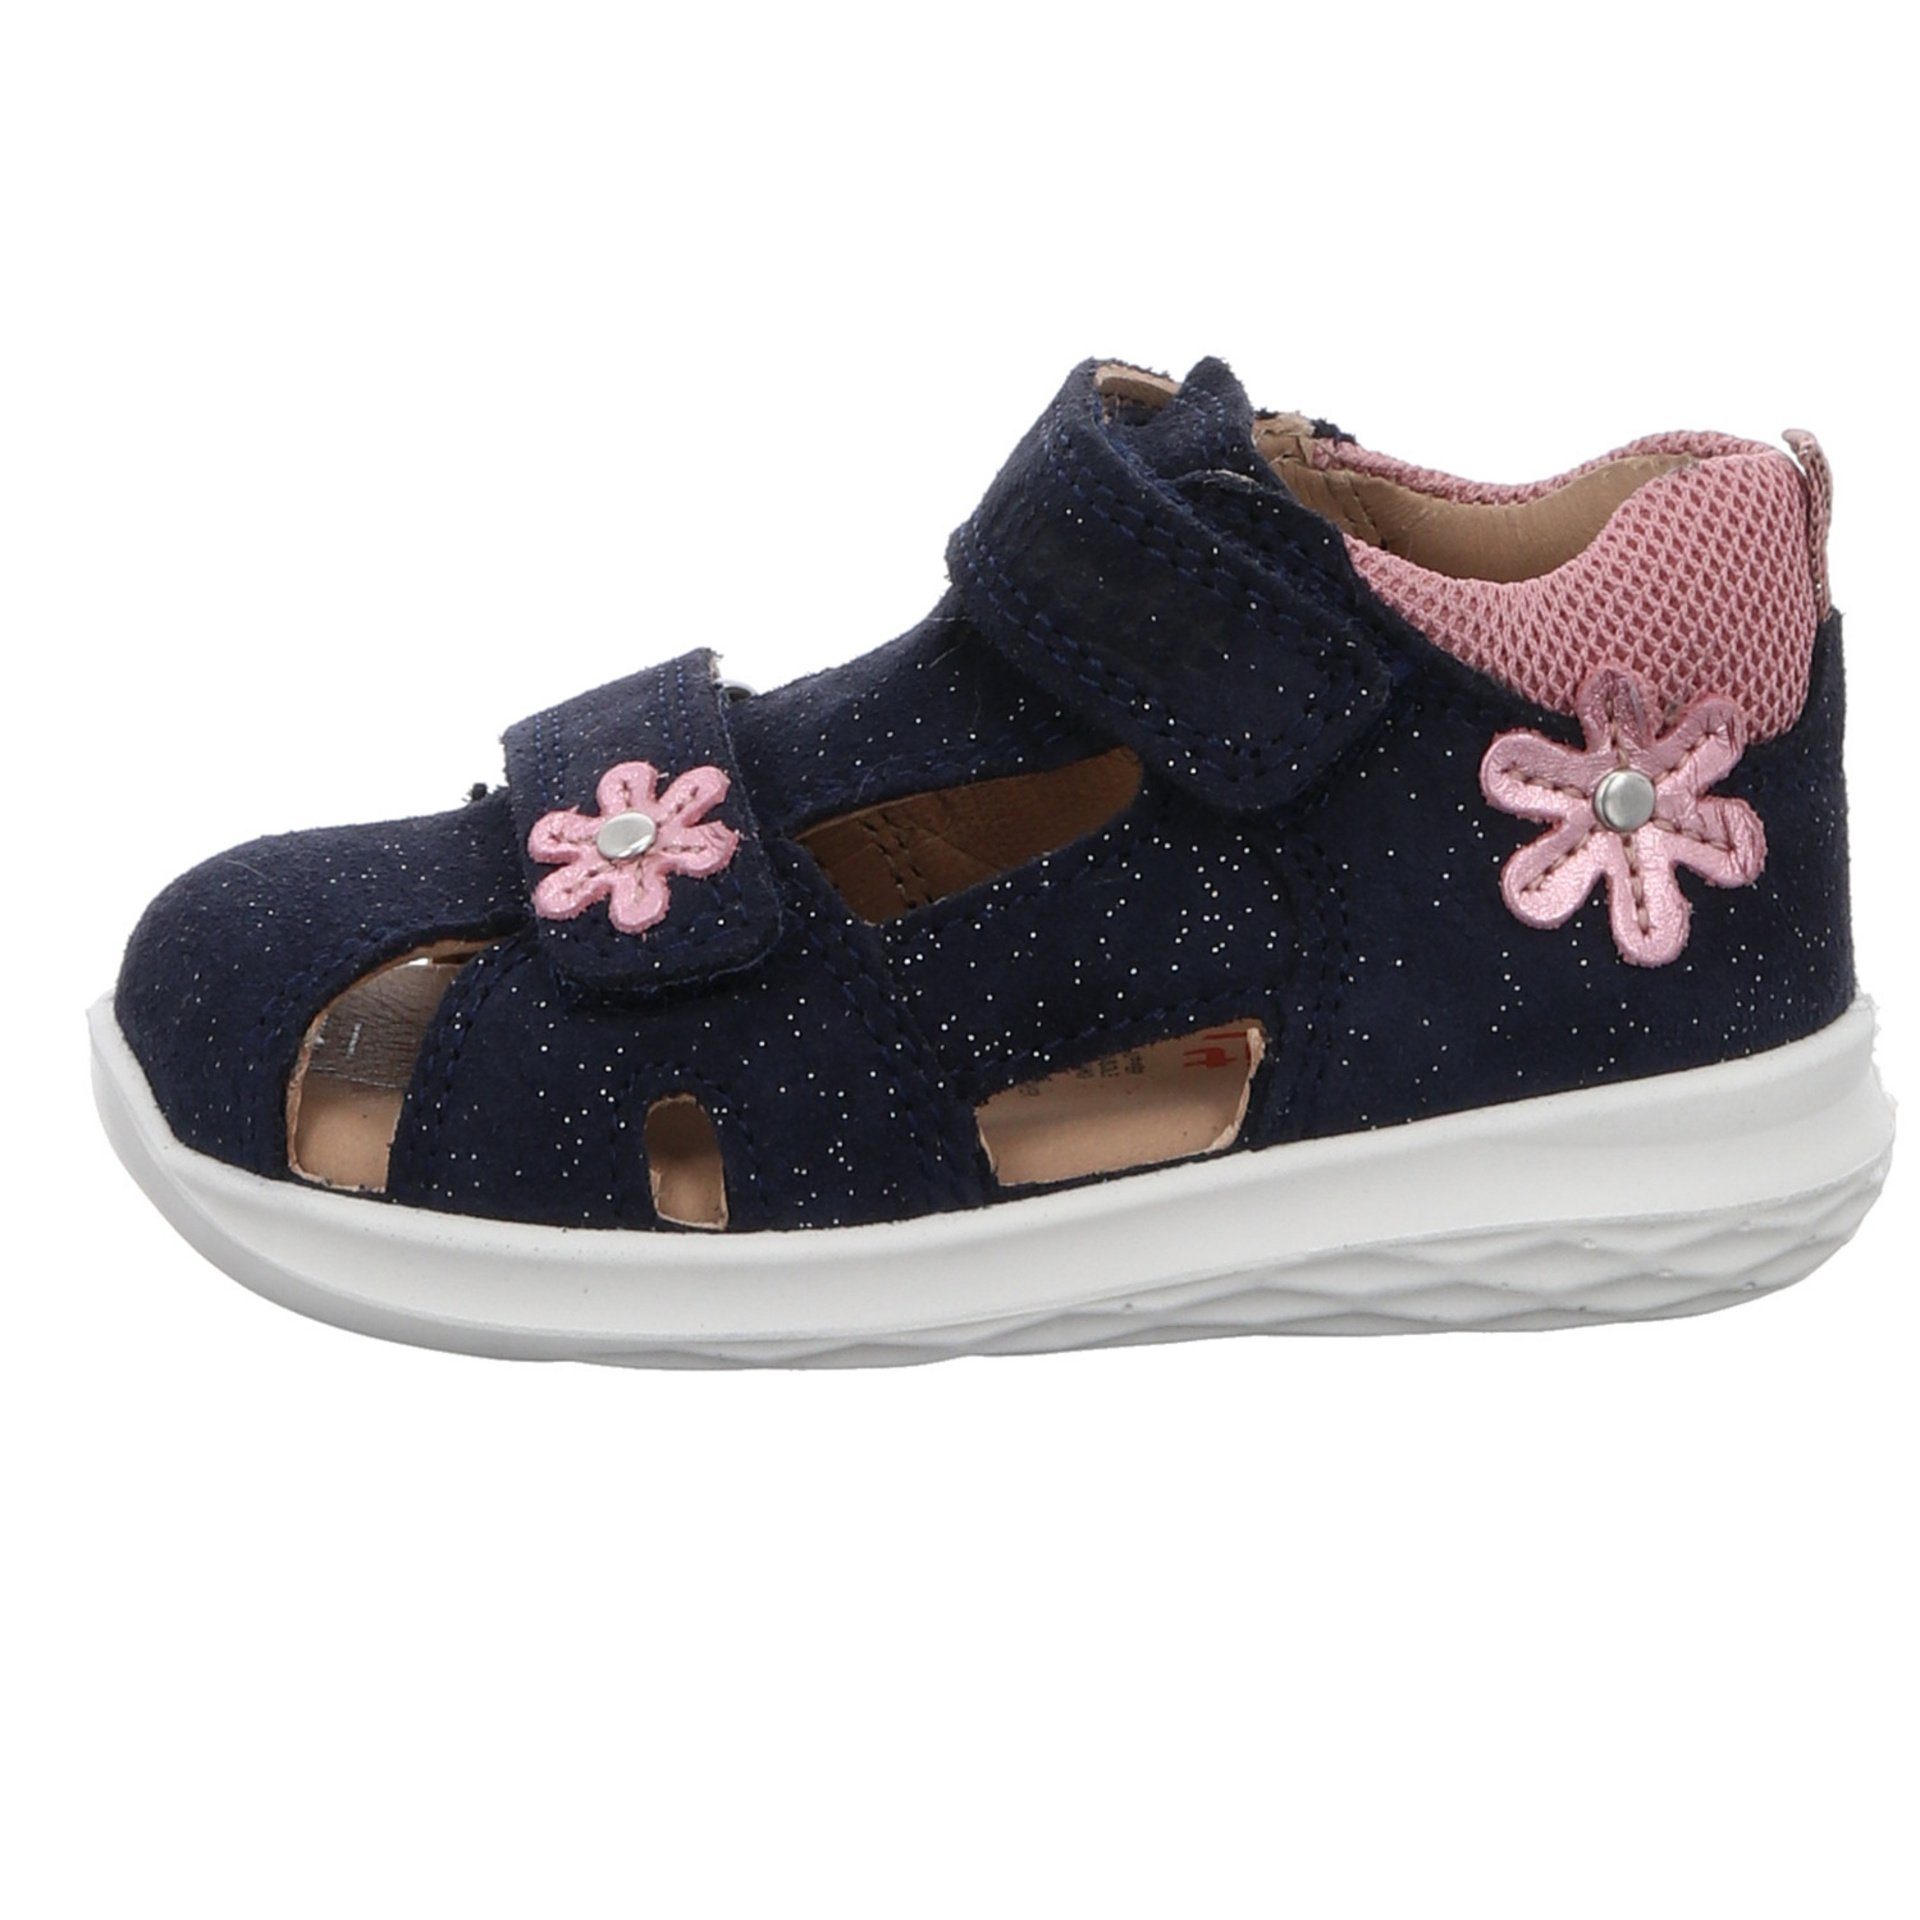 Superfit Mädchen Sandalen Schuhe Bumblebee Sandale Minilette Leder-/Textilkombination Kombi blau sonst